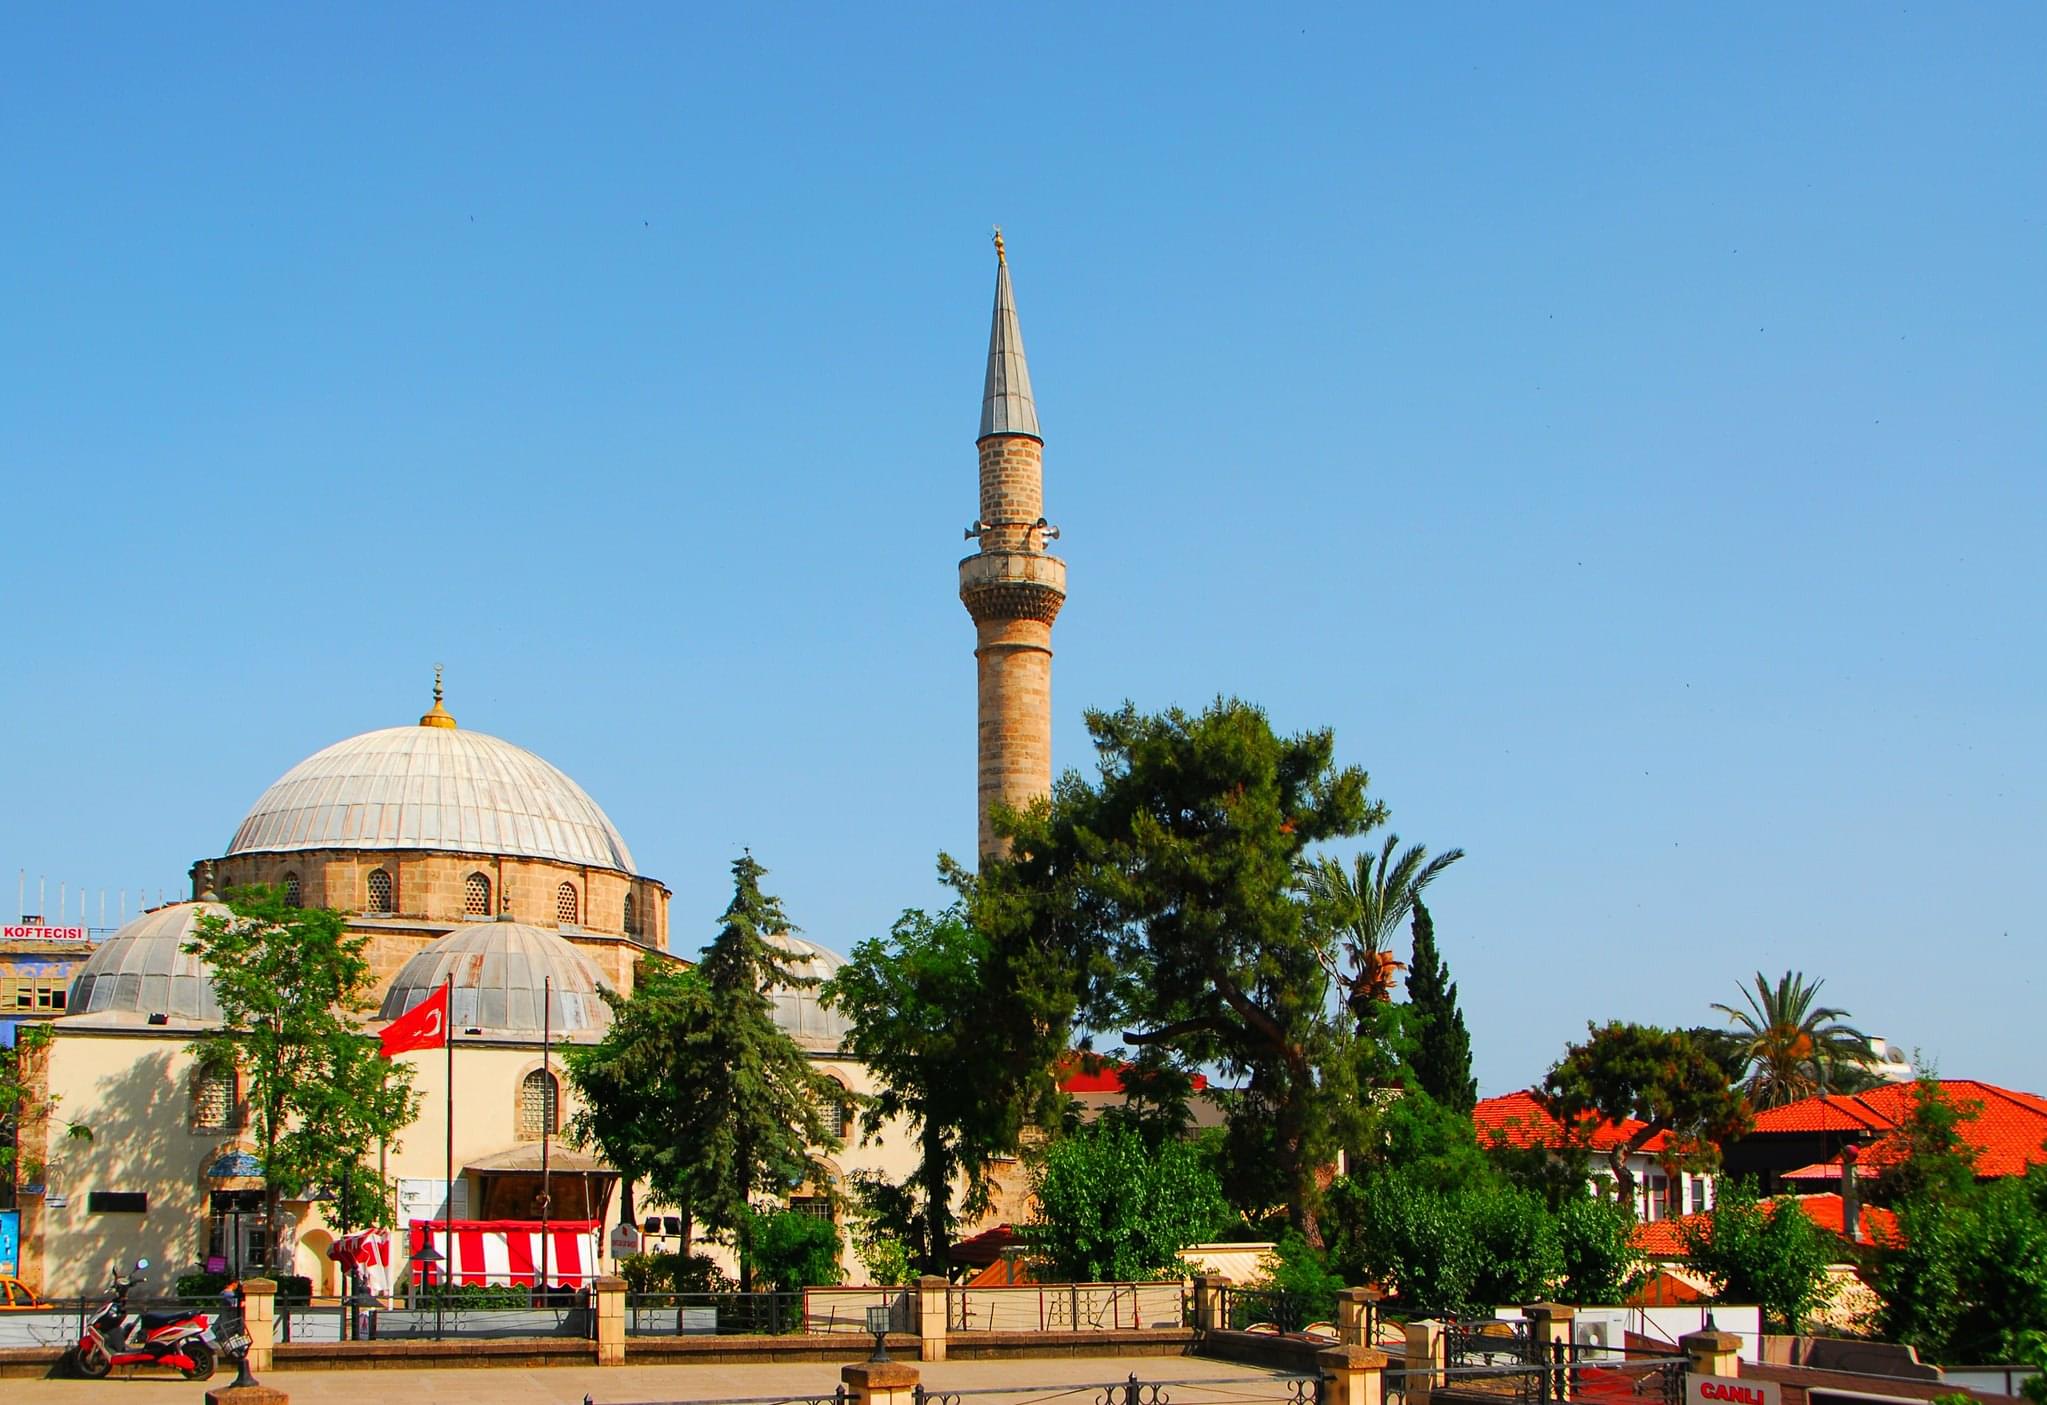 Tekeli Mehmet Pasha Mosque